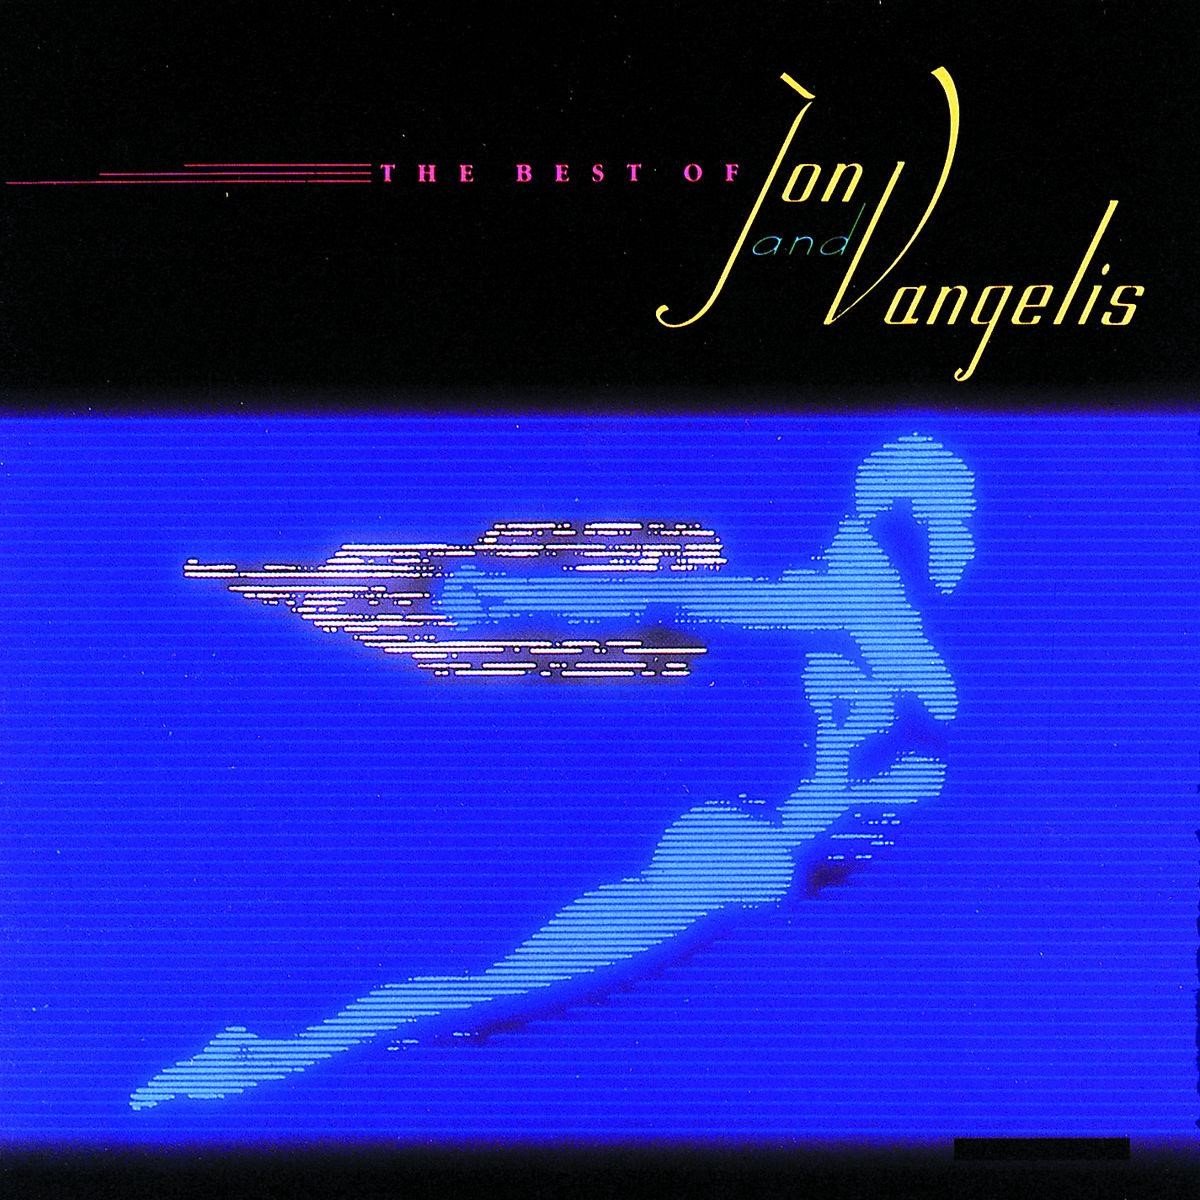 Jon And Vangelis - The Best Of (CD) - Jon And Vangelis